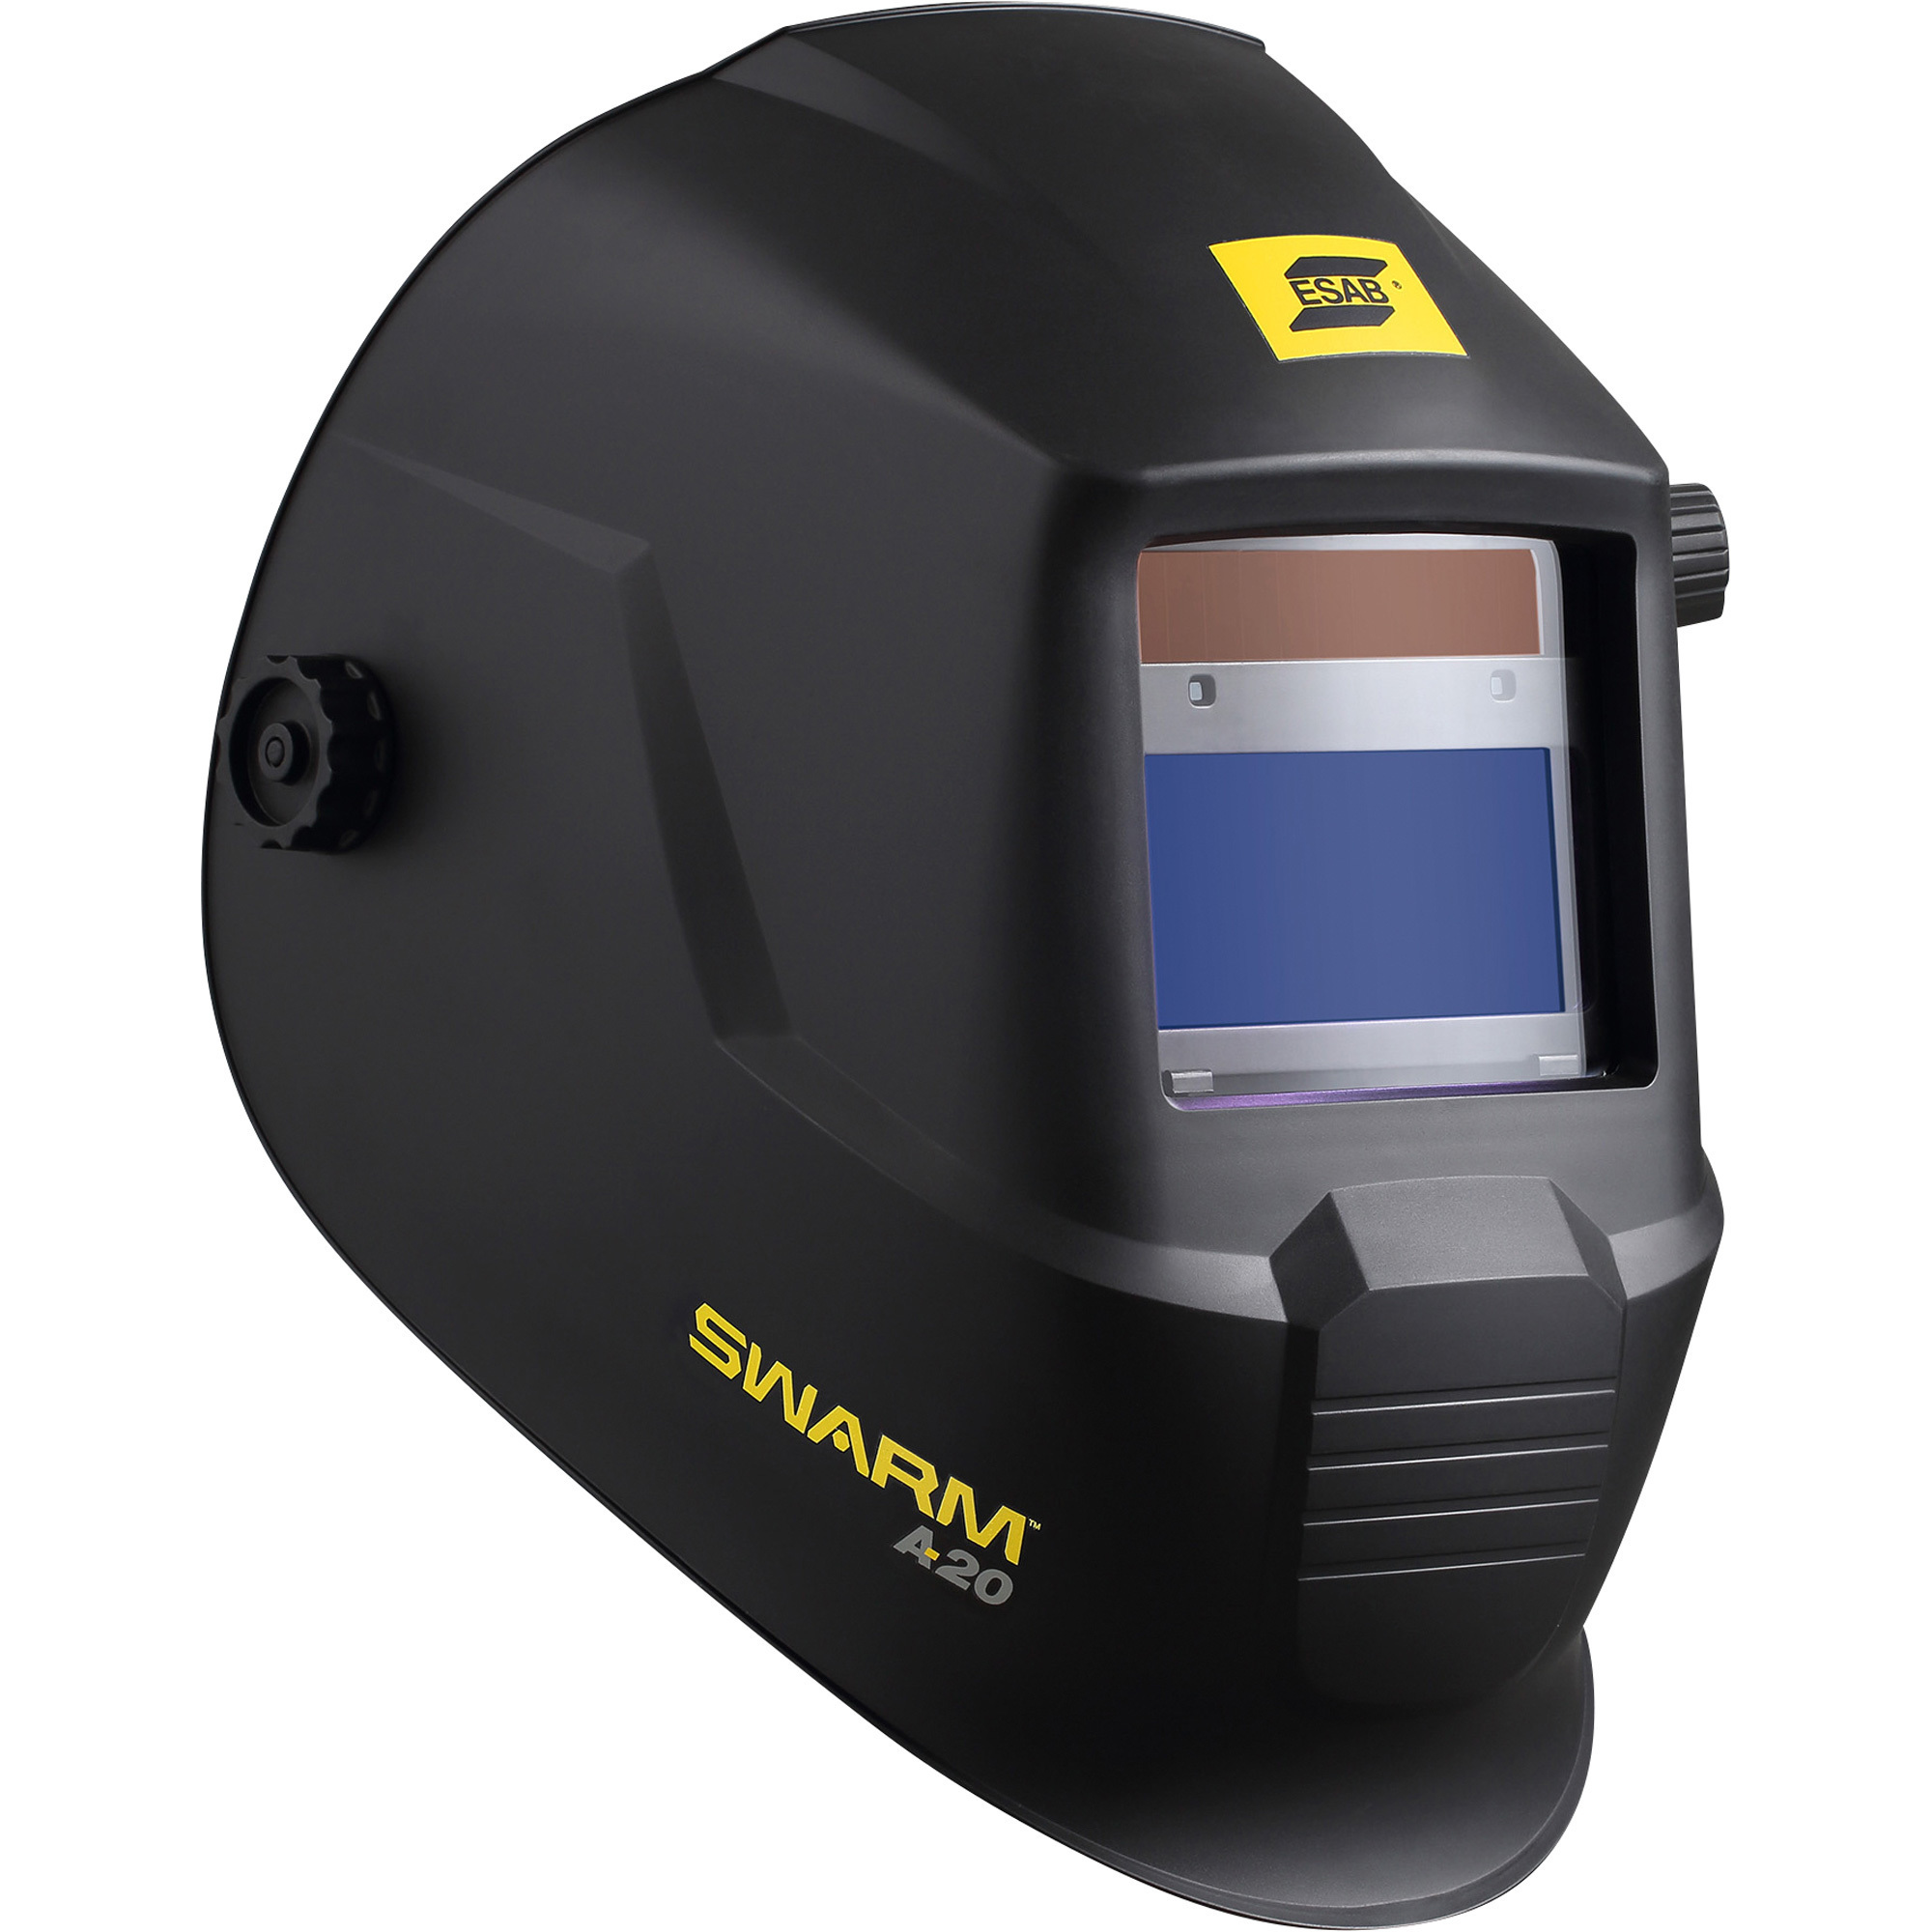 ESAB Swarm A20 Auto-Darkening Helmet â Black, Model 0700102043